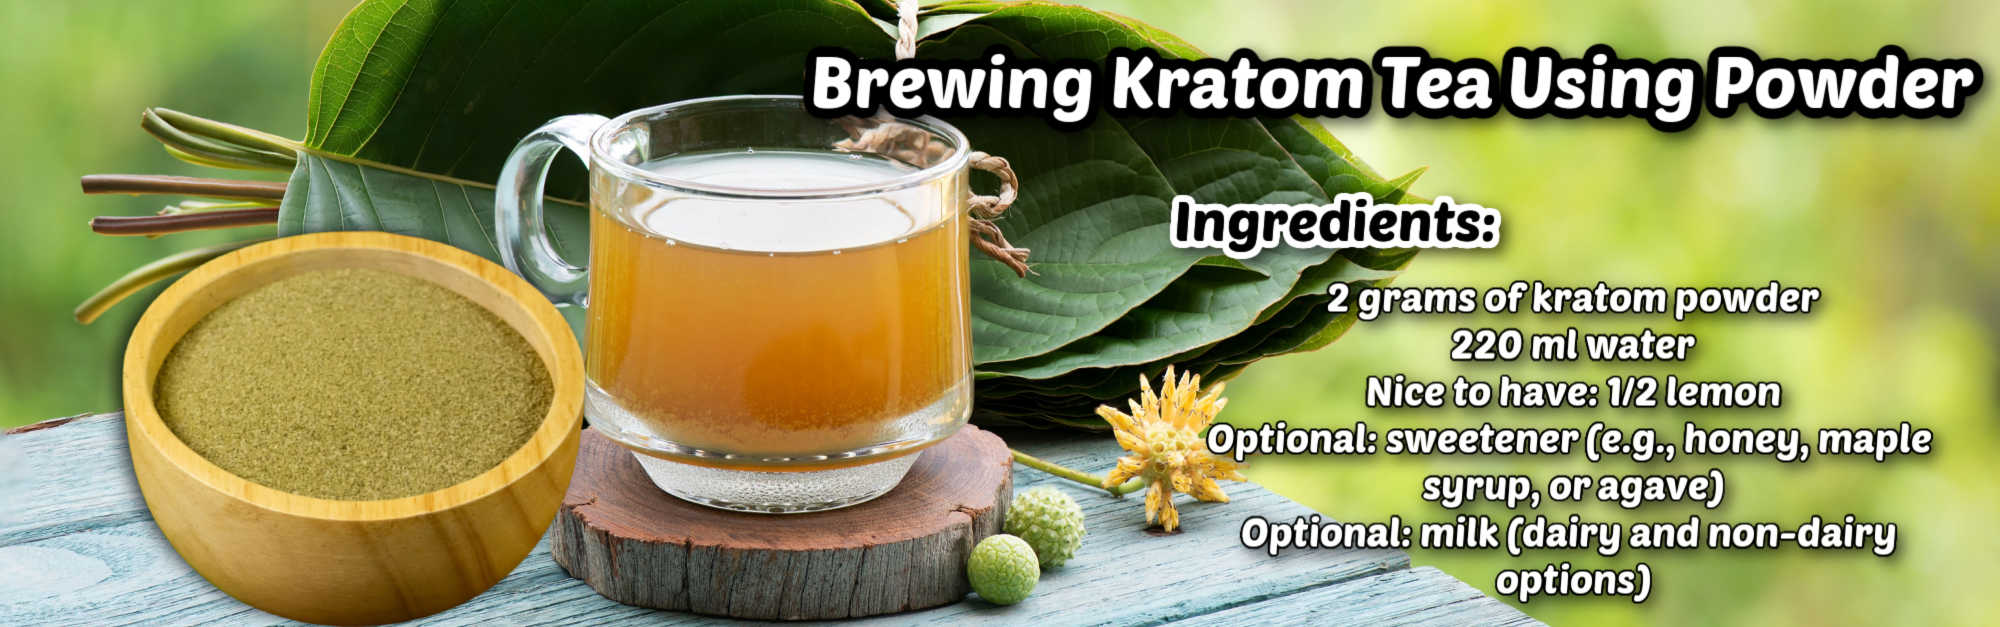 image of ingredients of brewing kratom tea using powder